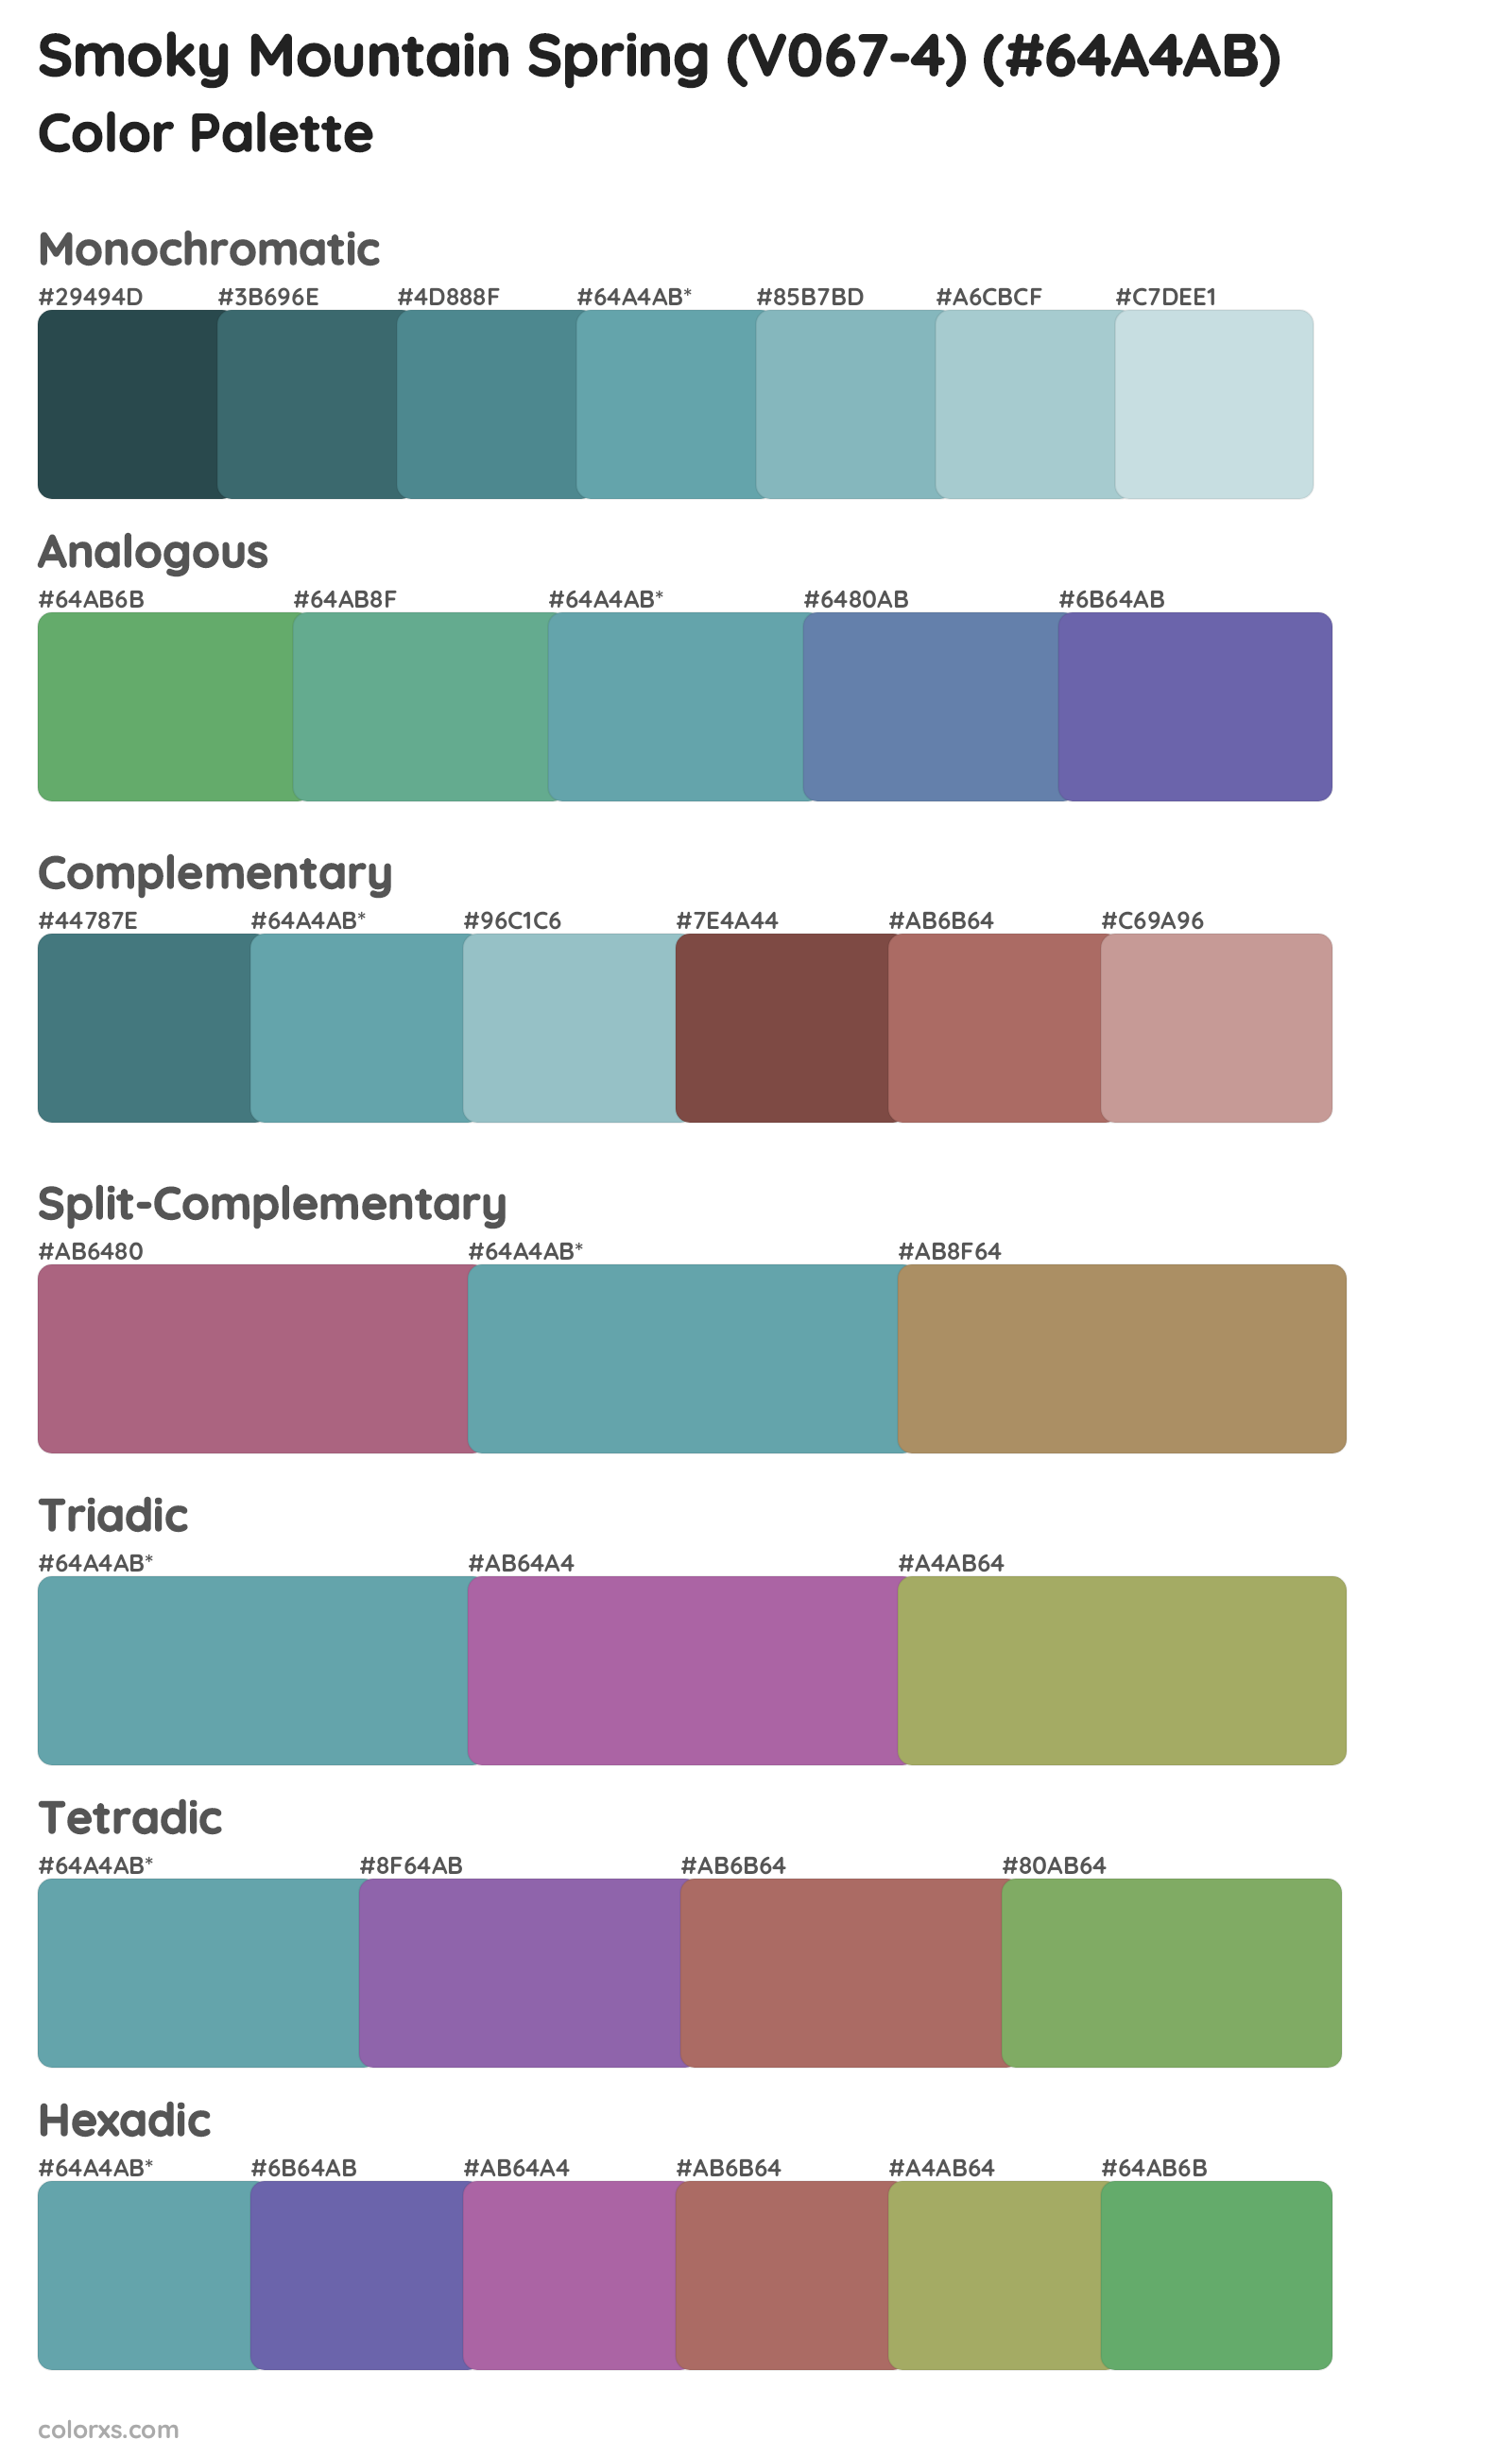 Smoky Mountain Spring (V067-4) Color Scheme Palettes